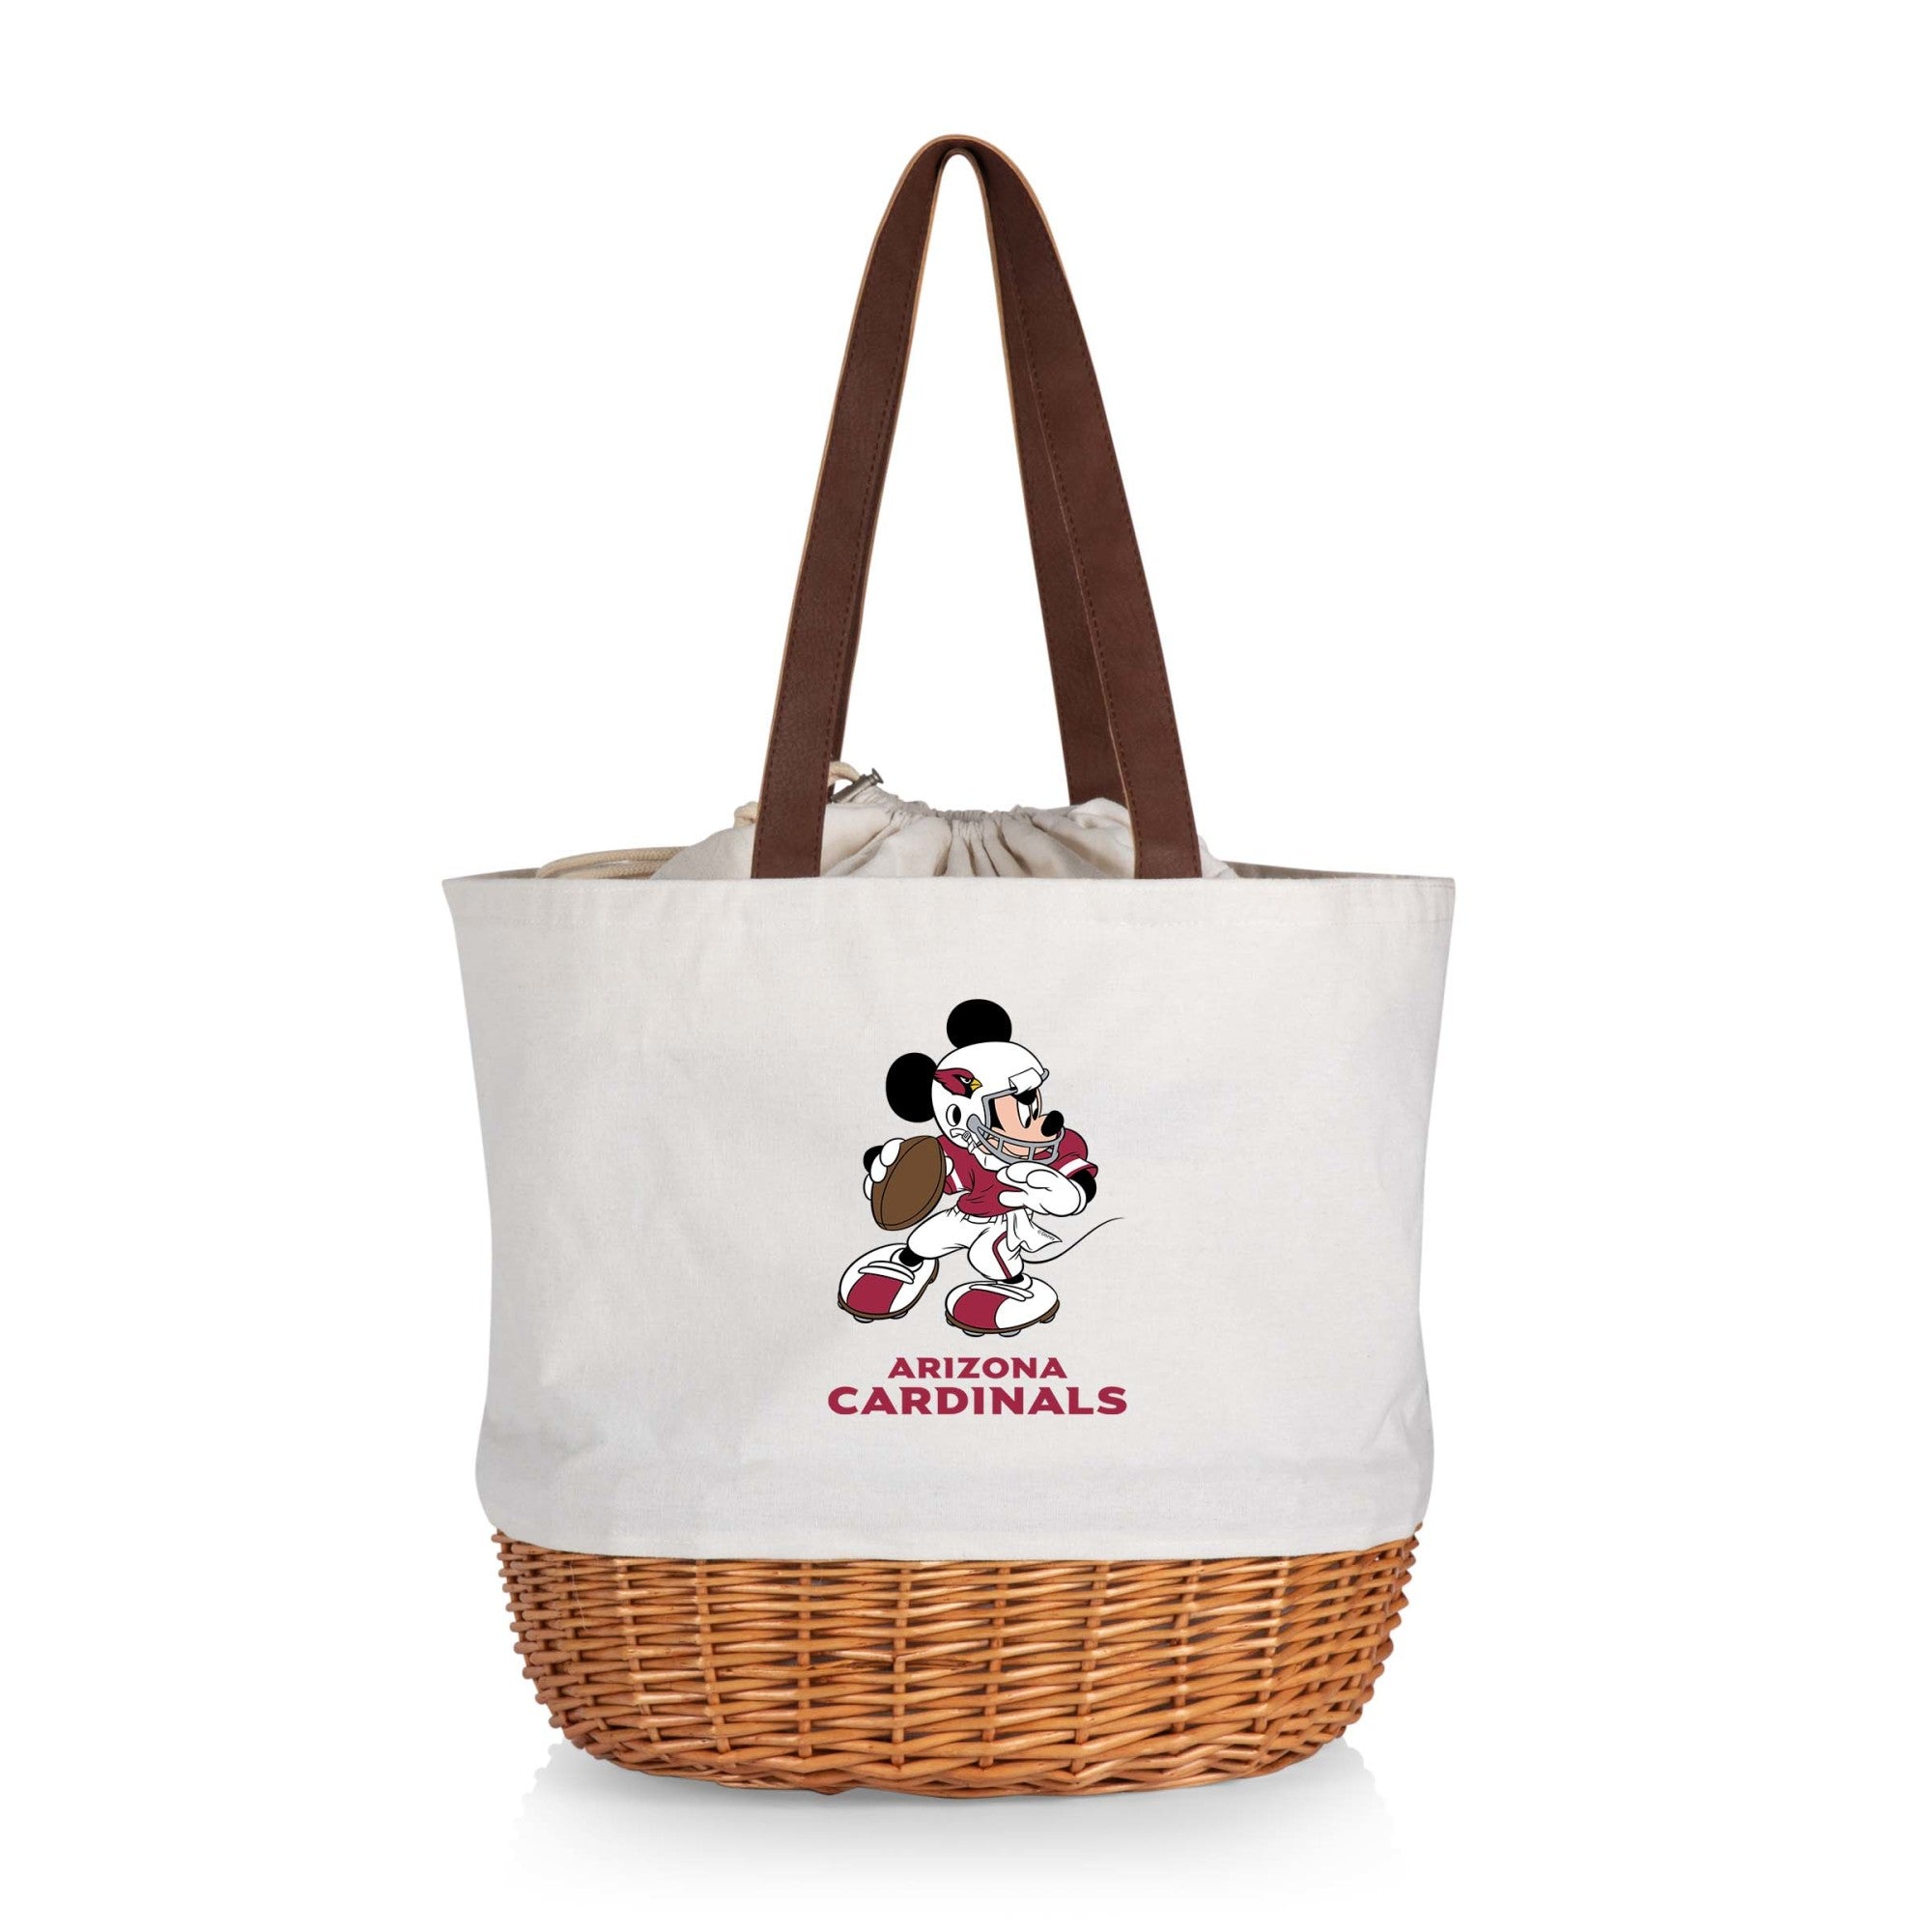 Mickey Mouse - Arizona Cardinals - Coronado Canvas and Willow Basket Tote